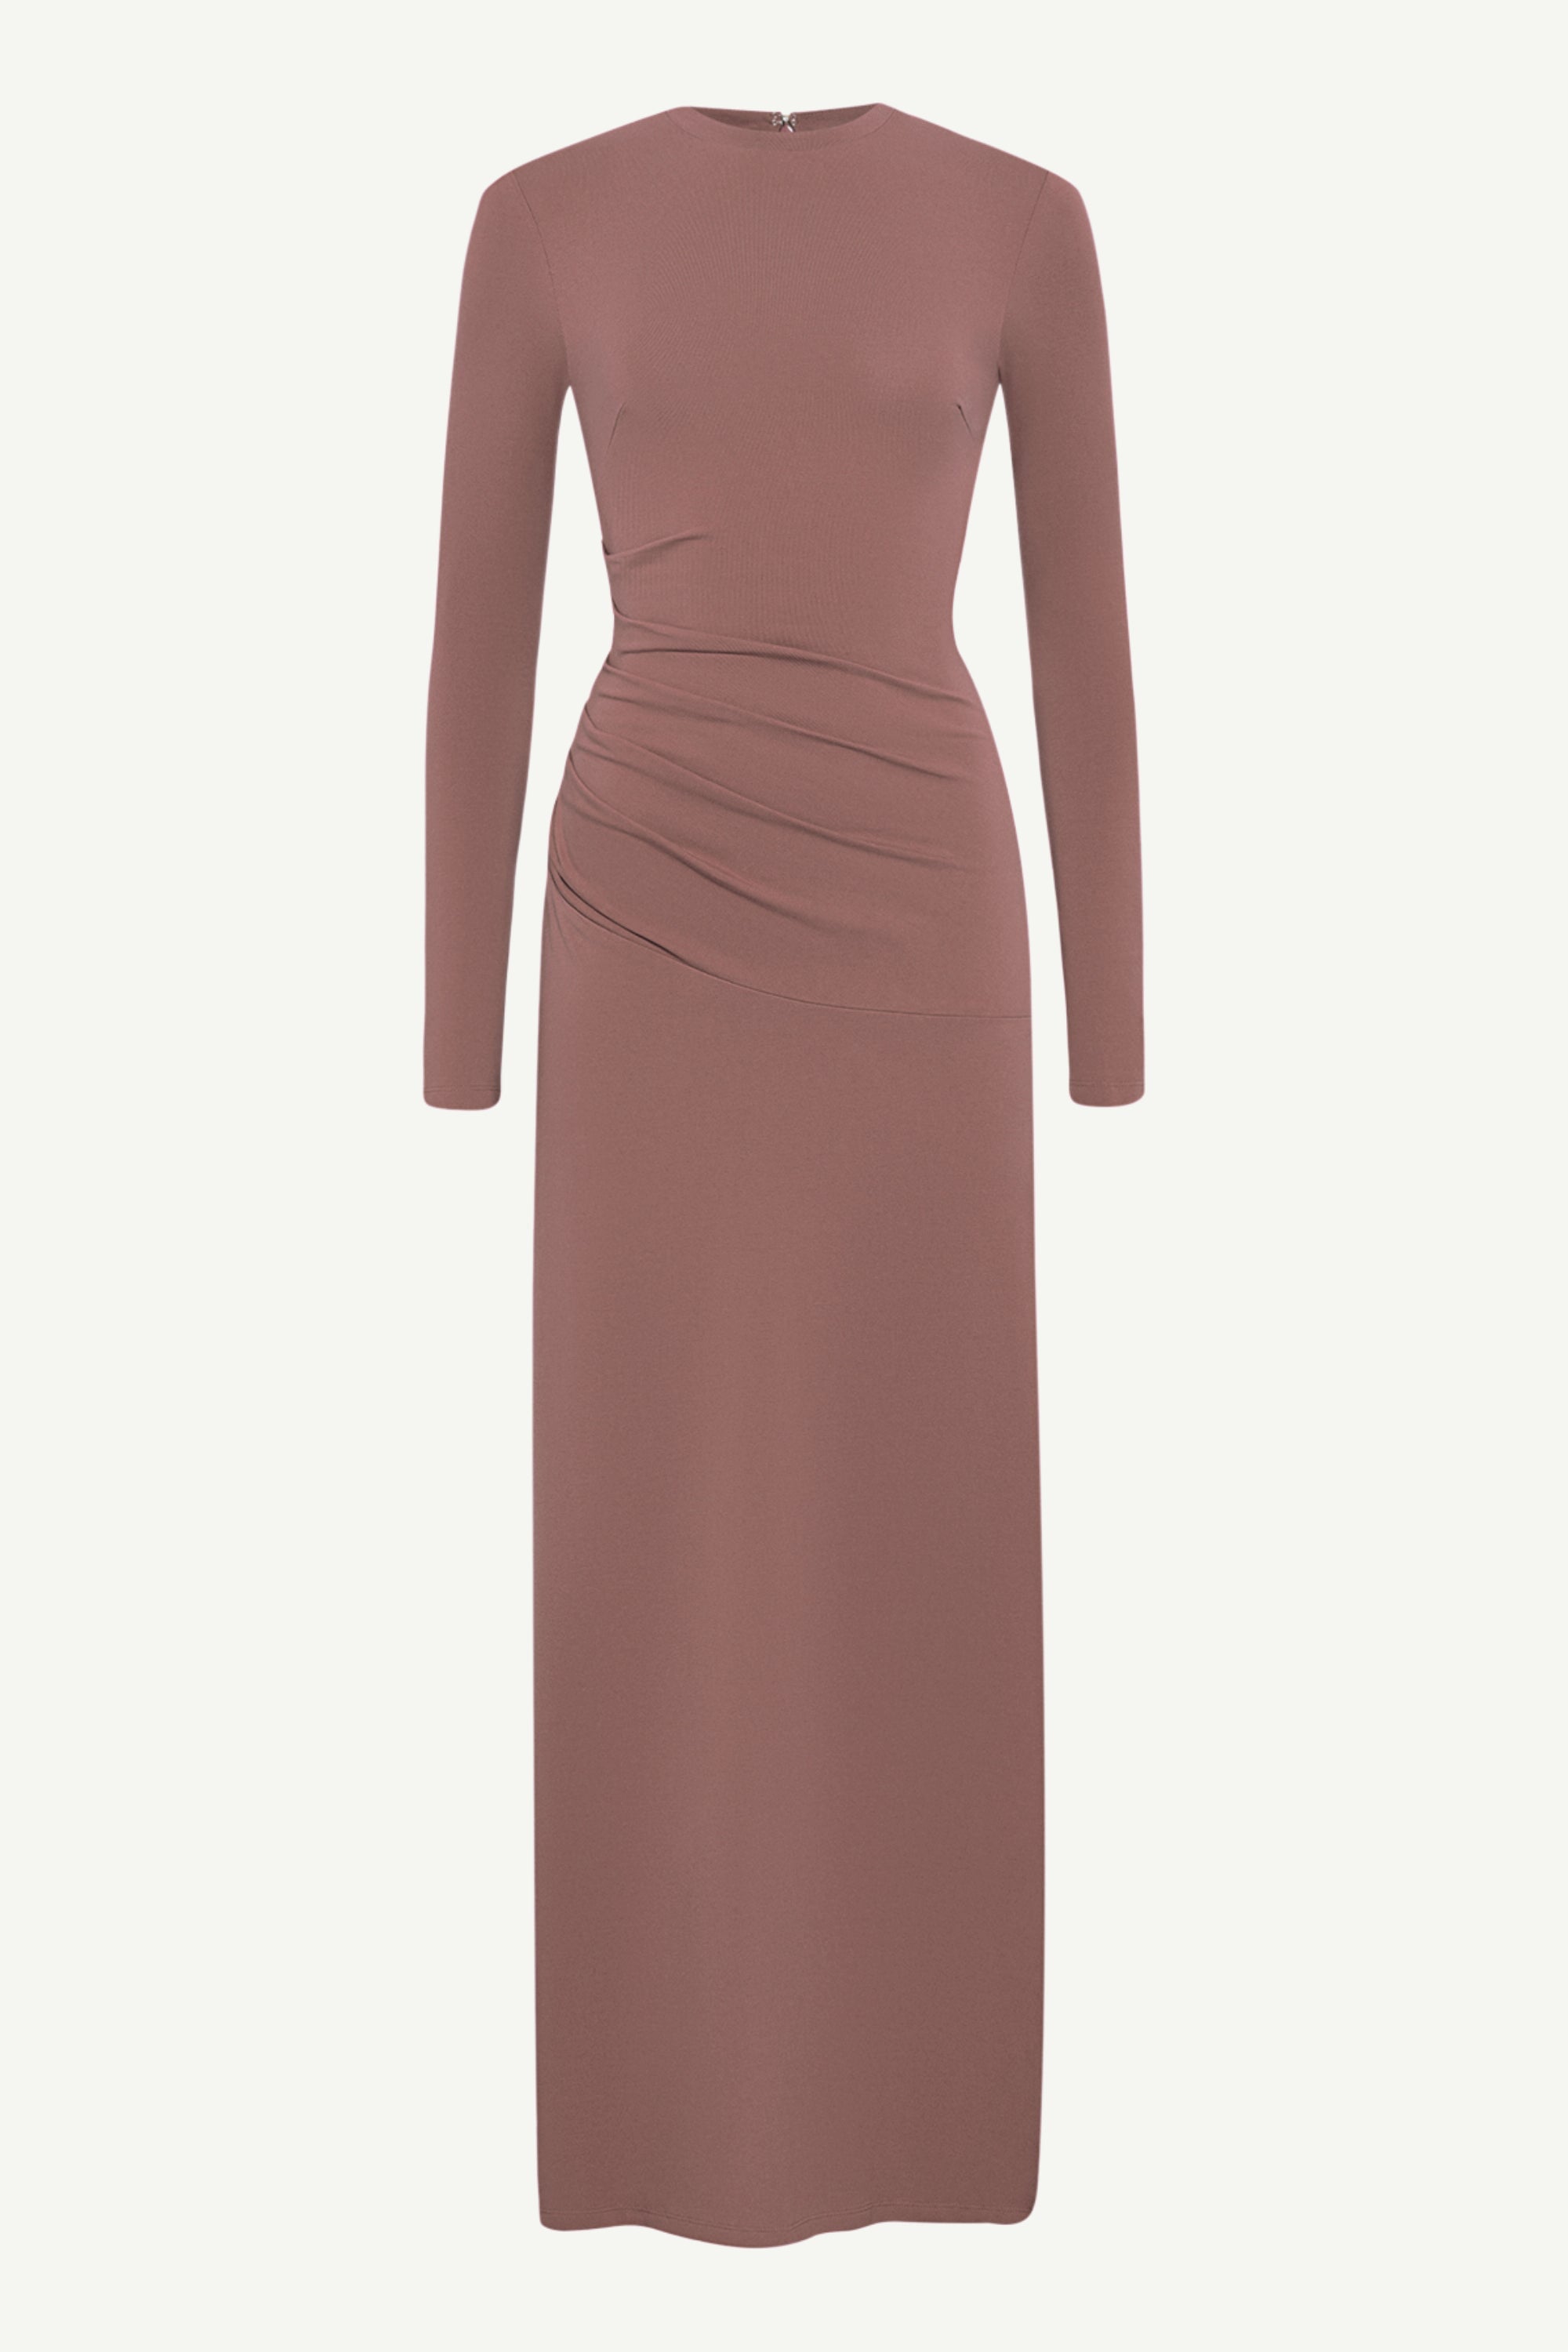 Natalie Rouched Jersey Maxi Dress - Deep Taupe Clothing saigonodysseyhotel 